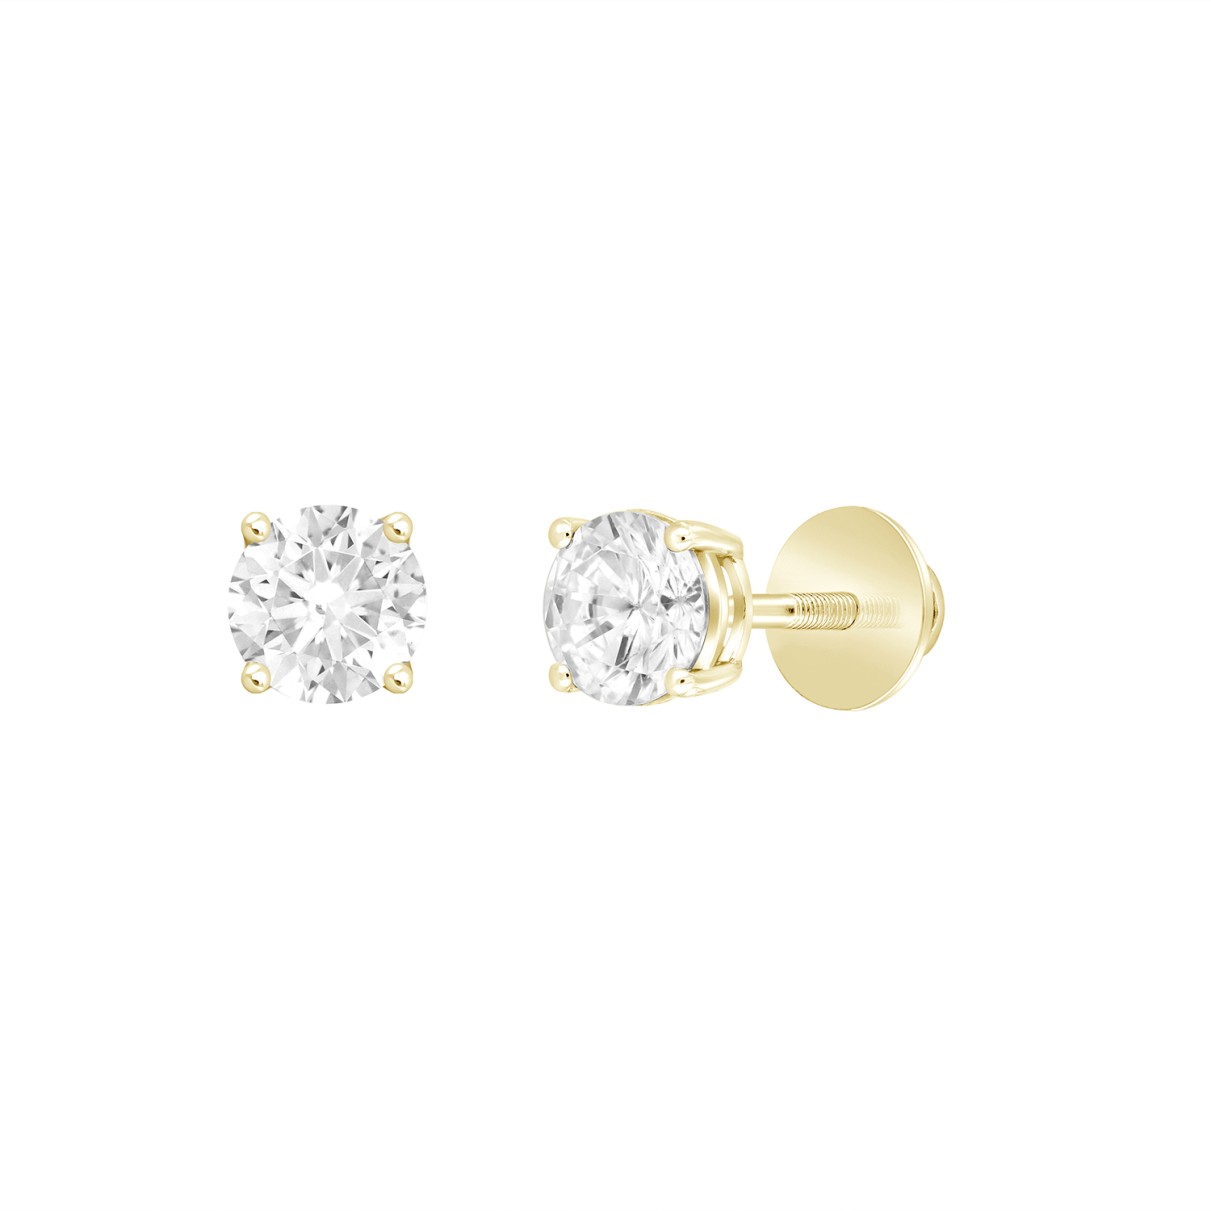 14K YELLOW GOLD 4CT ROUND DIAMOND LADIES SOLITAIRE EARRINGS (CENTER STONE ROUND DIAMOND 2CT )